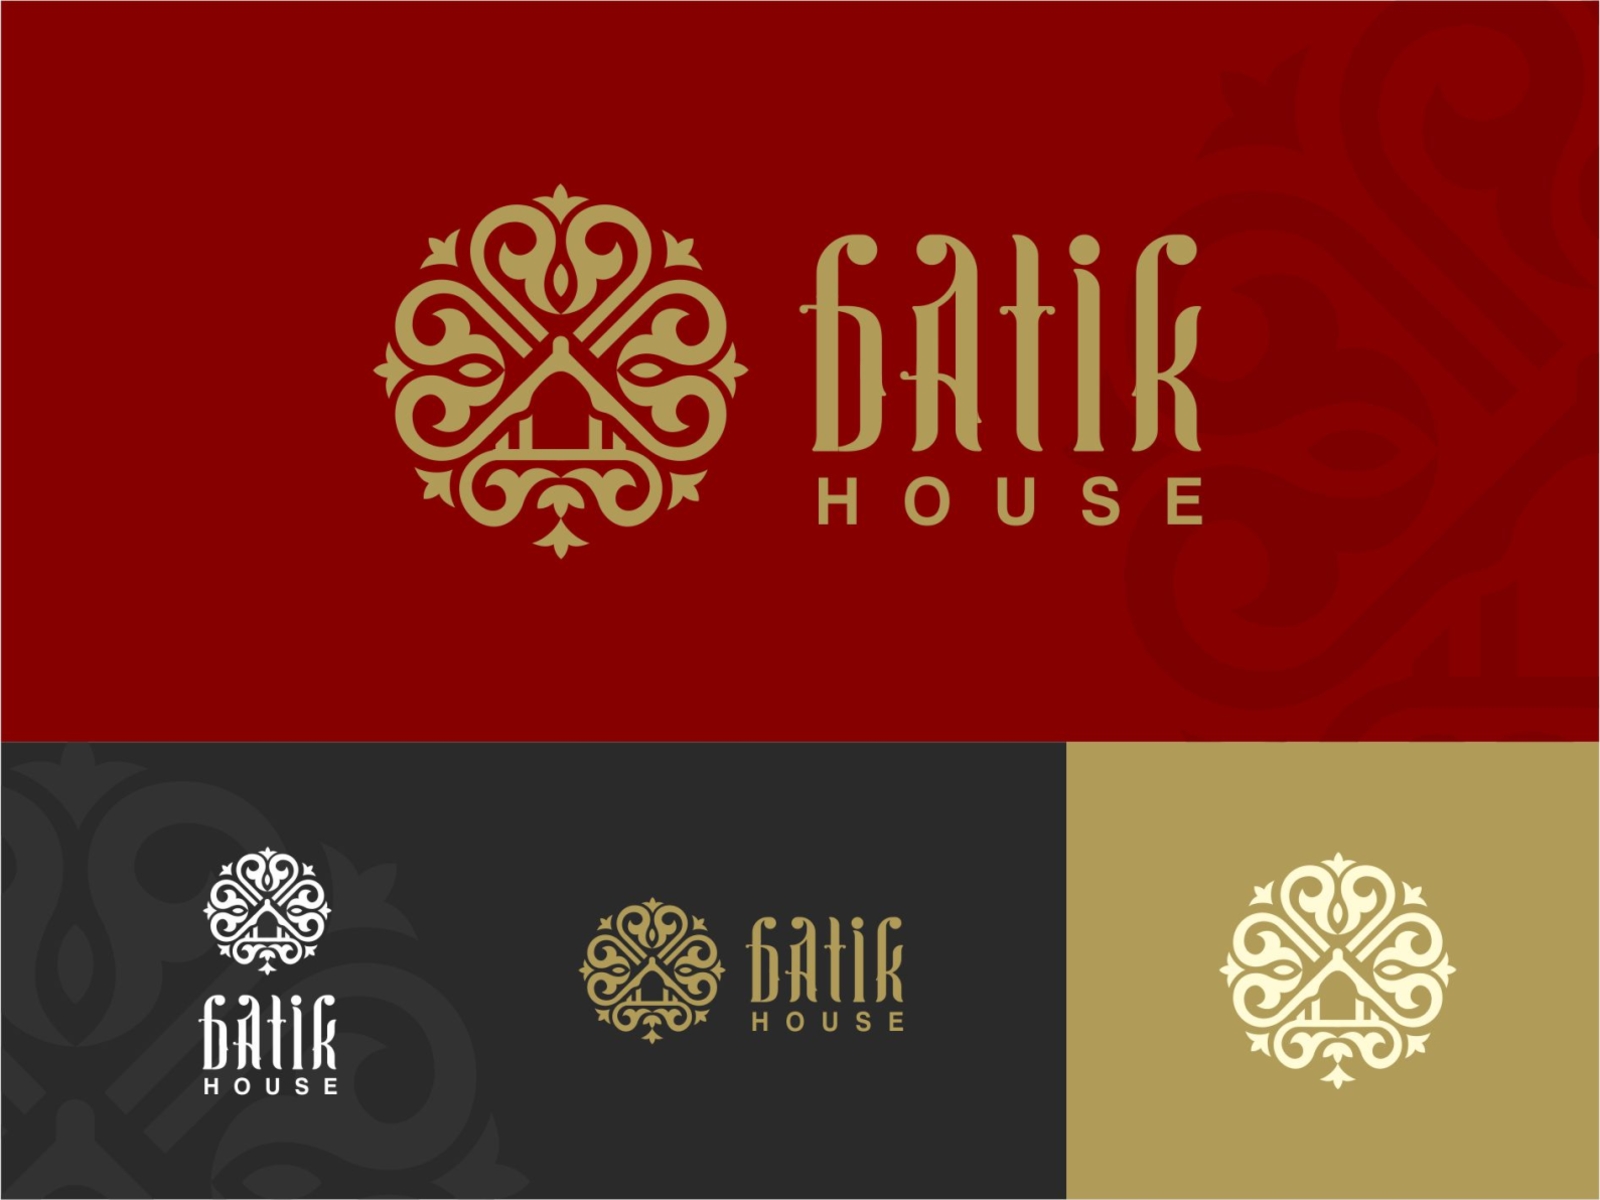  batik  house logo  by imagenatif on Dribbble